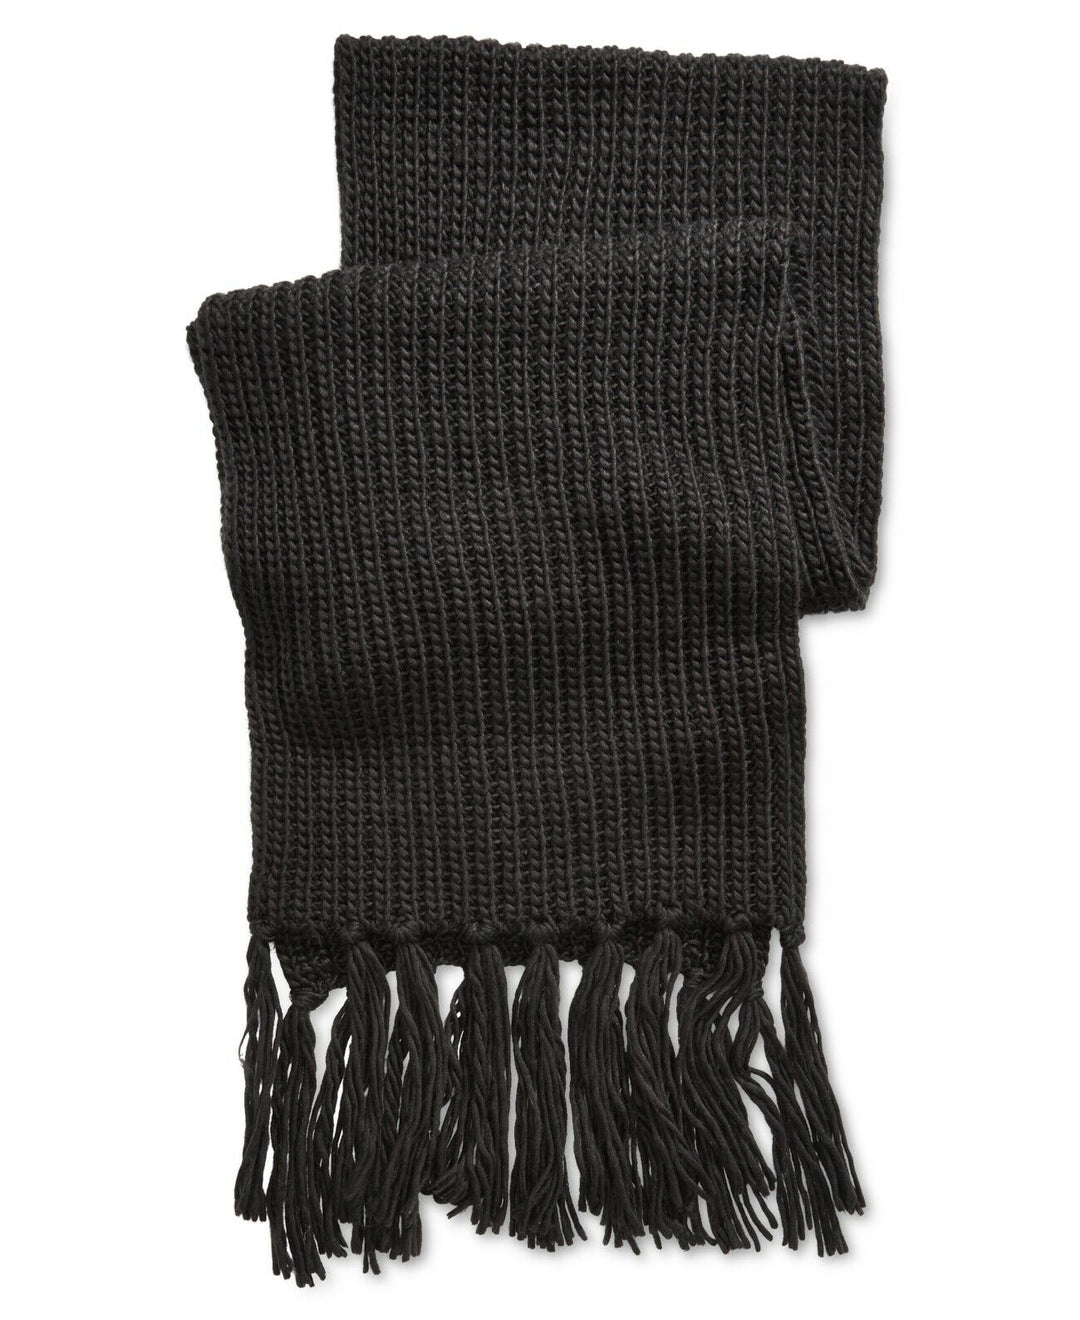 Steven Madden Men's Chunky Knit Scarf Black One Size